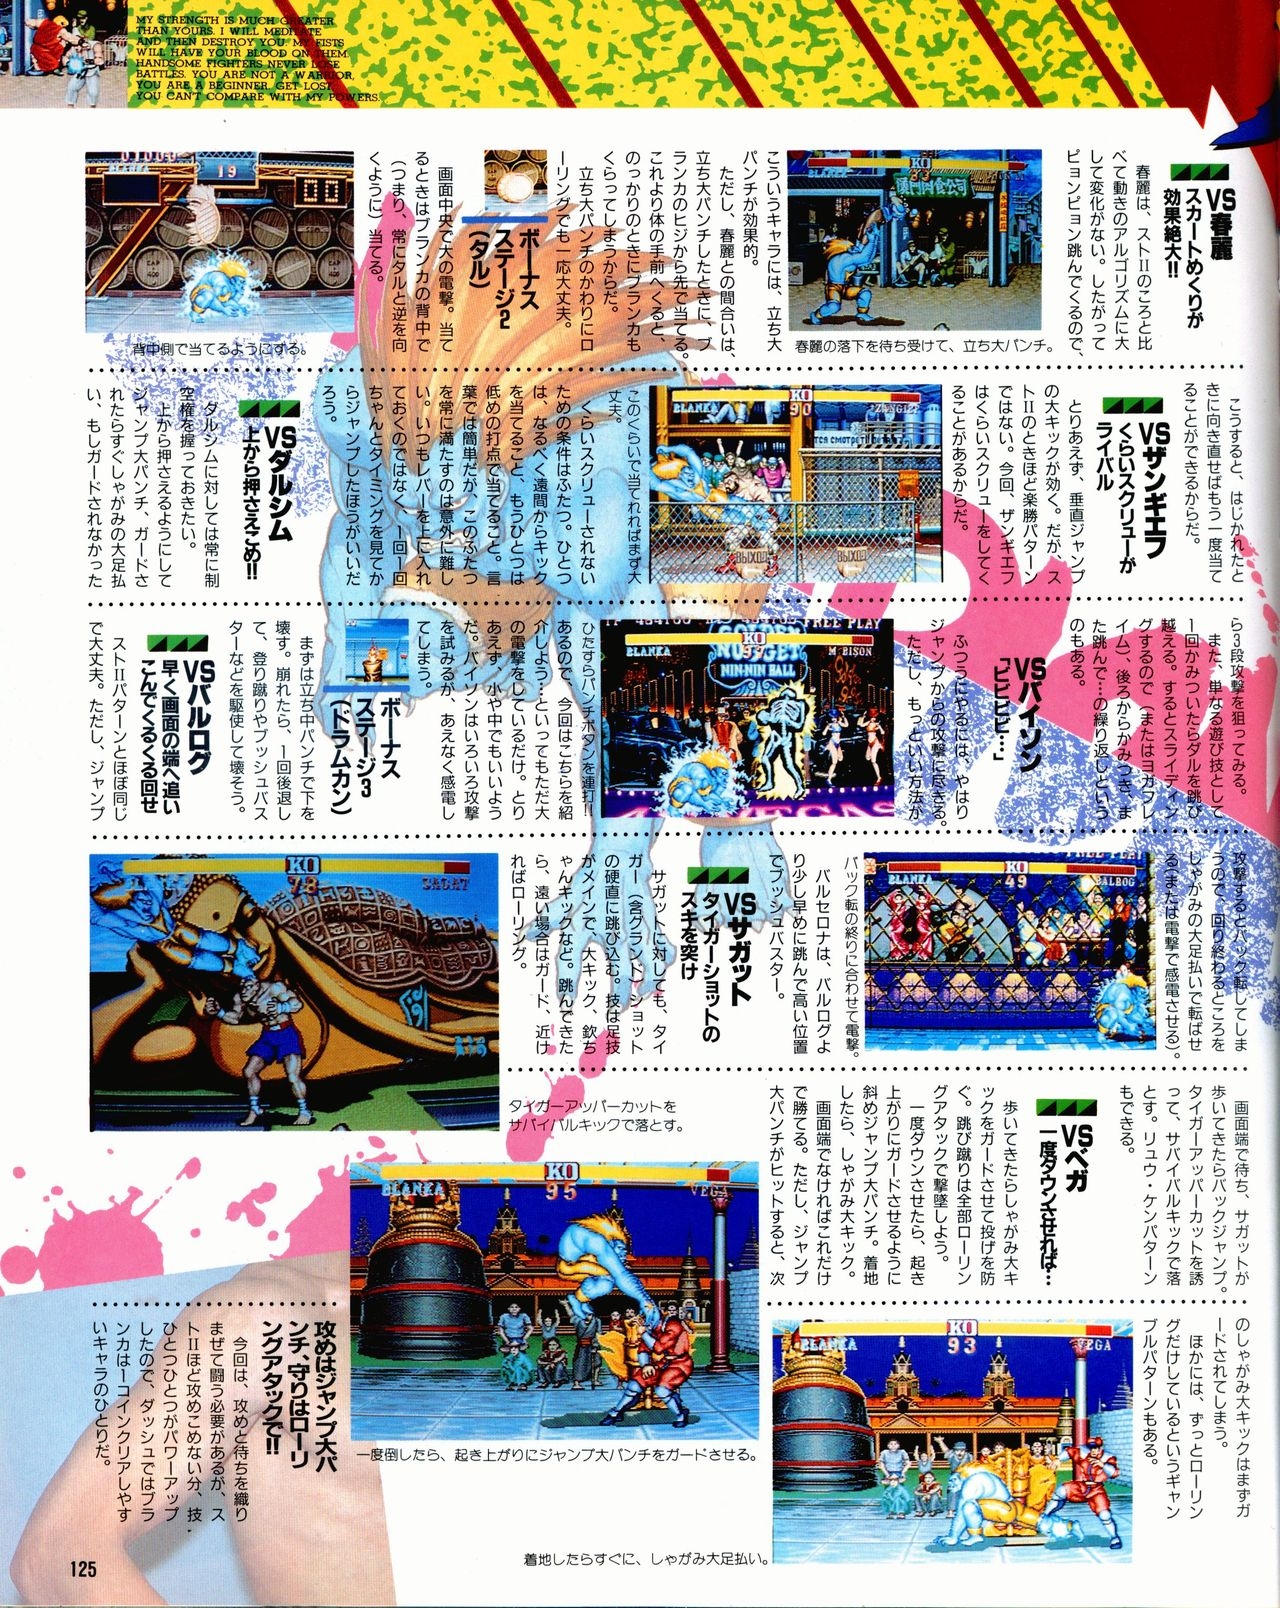 Street Fighter II Dash - Gamest special issue 77 126